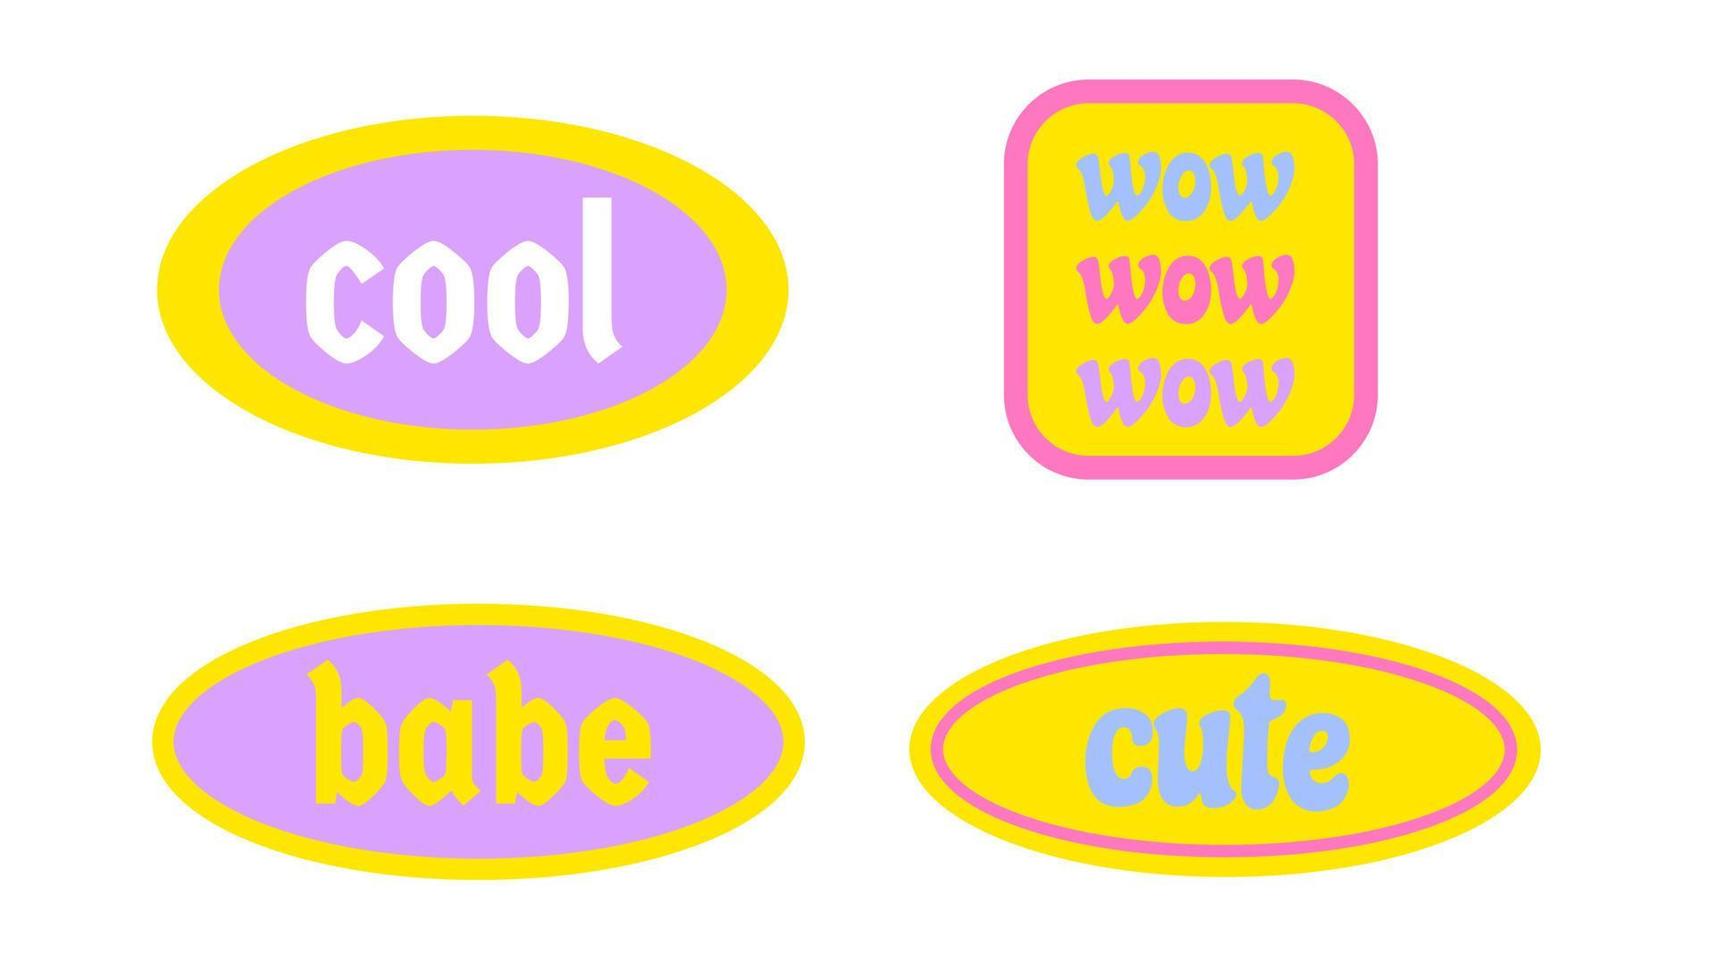 Sticker girly 90s. Vector set of pop stickers 2000 vibe. Retro 2000 vibe